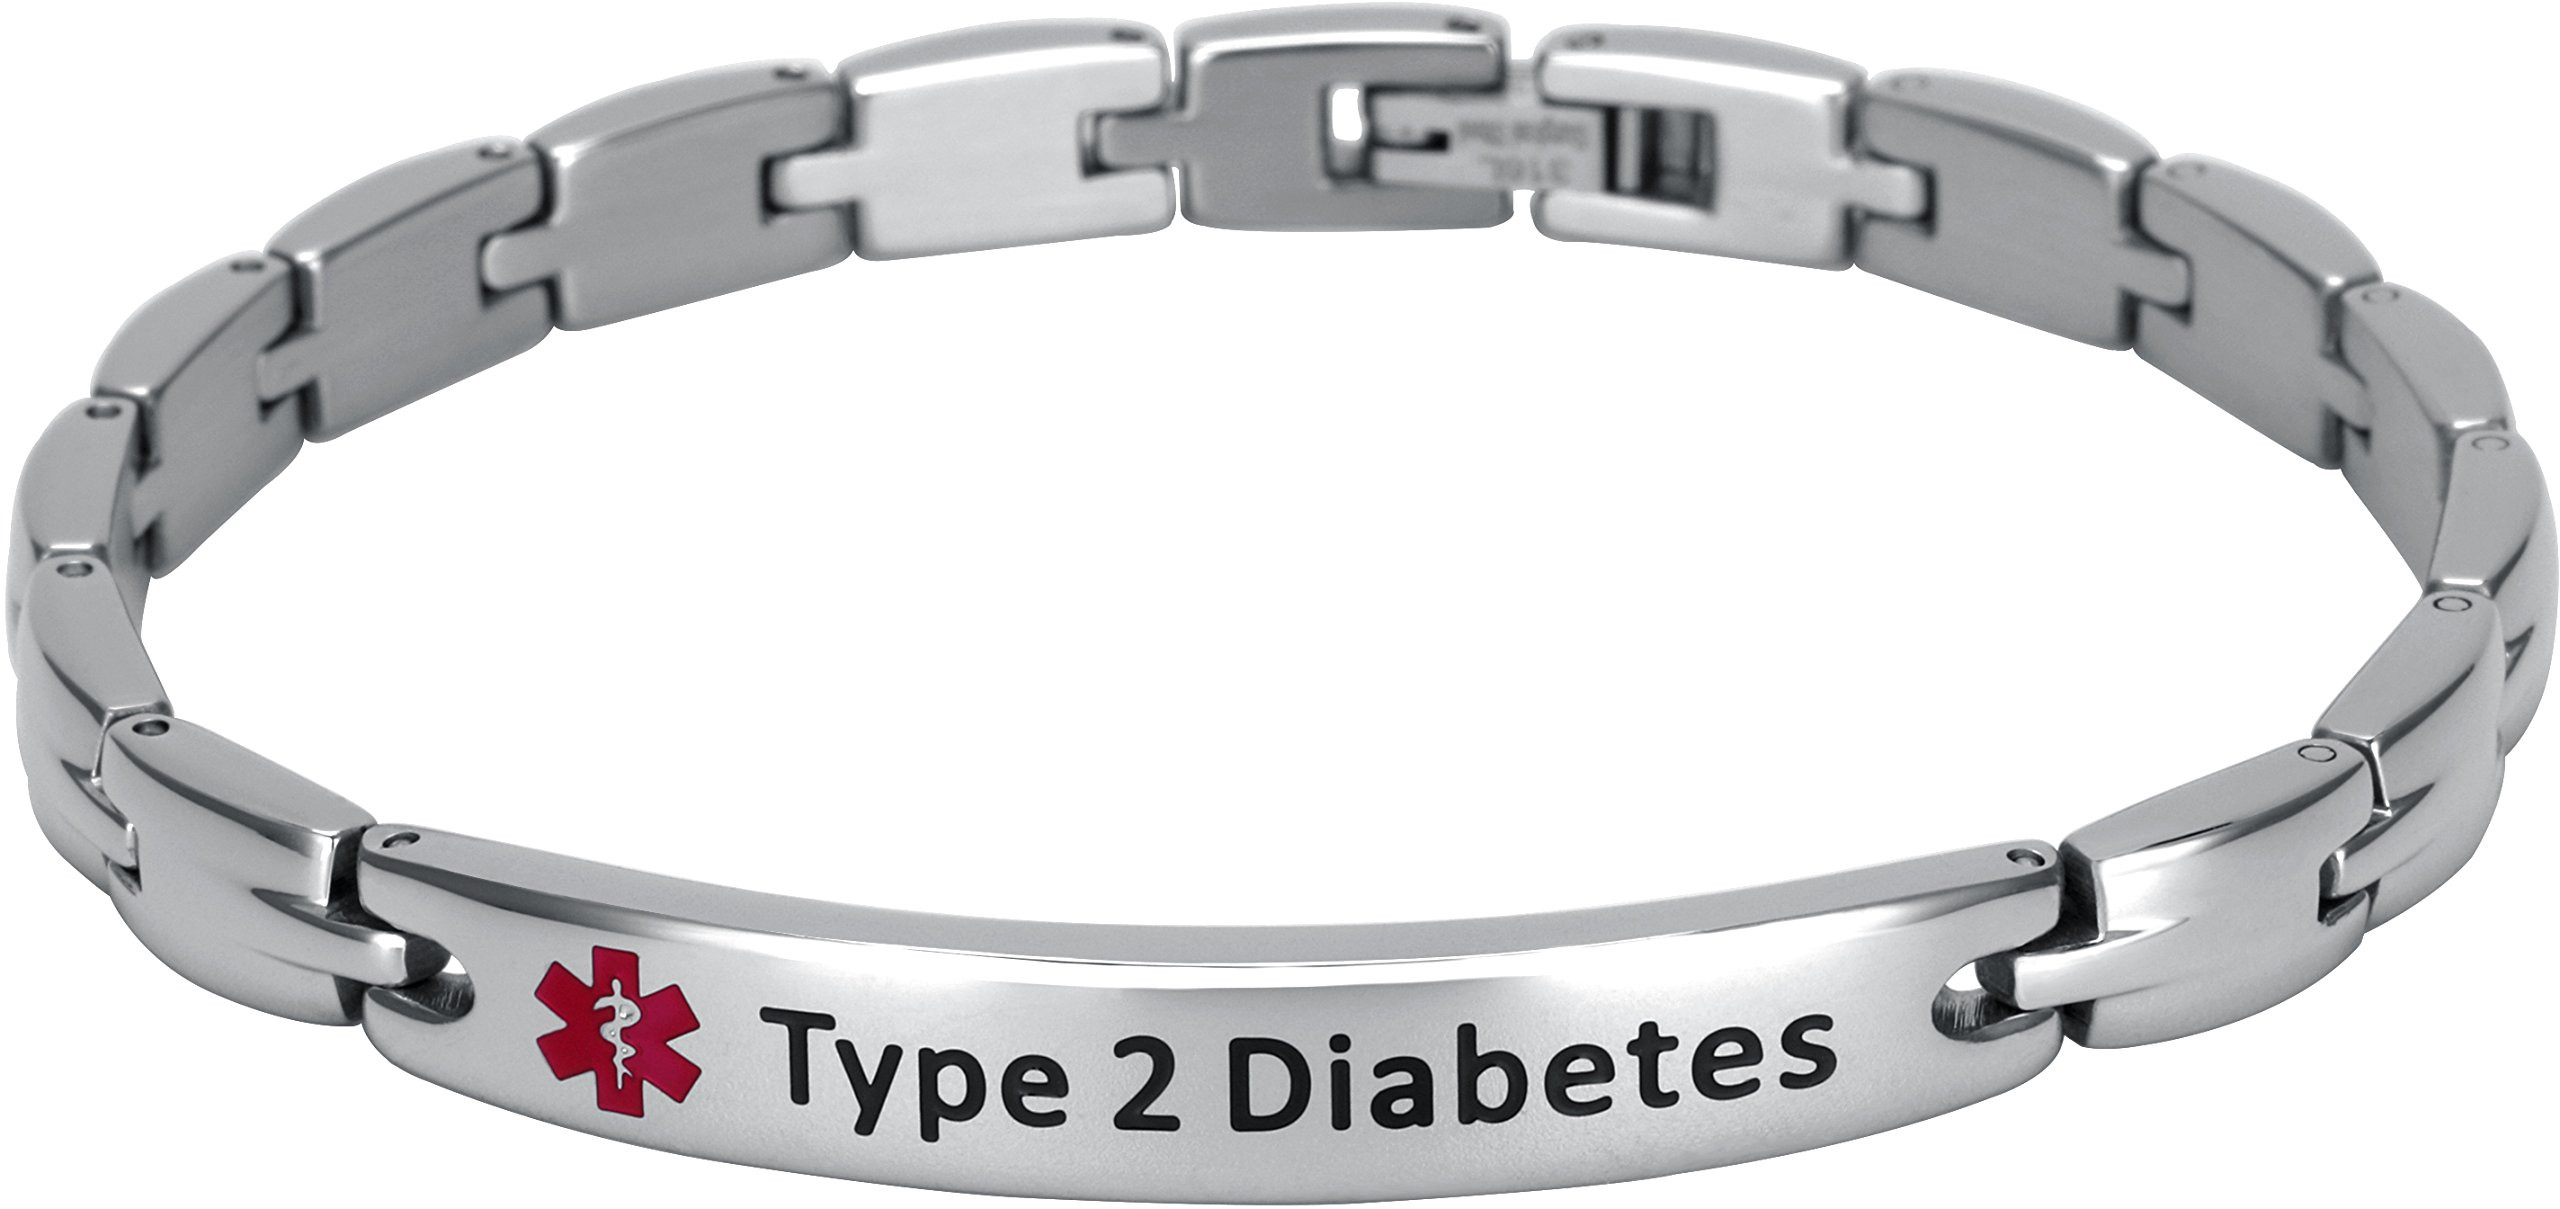 Type 2 Diabetes Bracelet
 Amazon Elegant Surgical Grade Steel Medical Alert ID